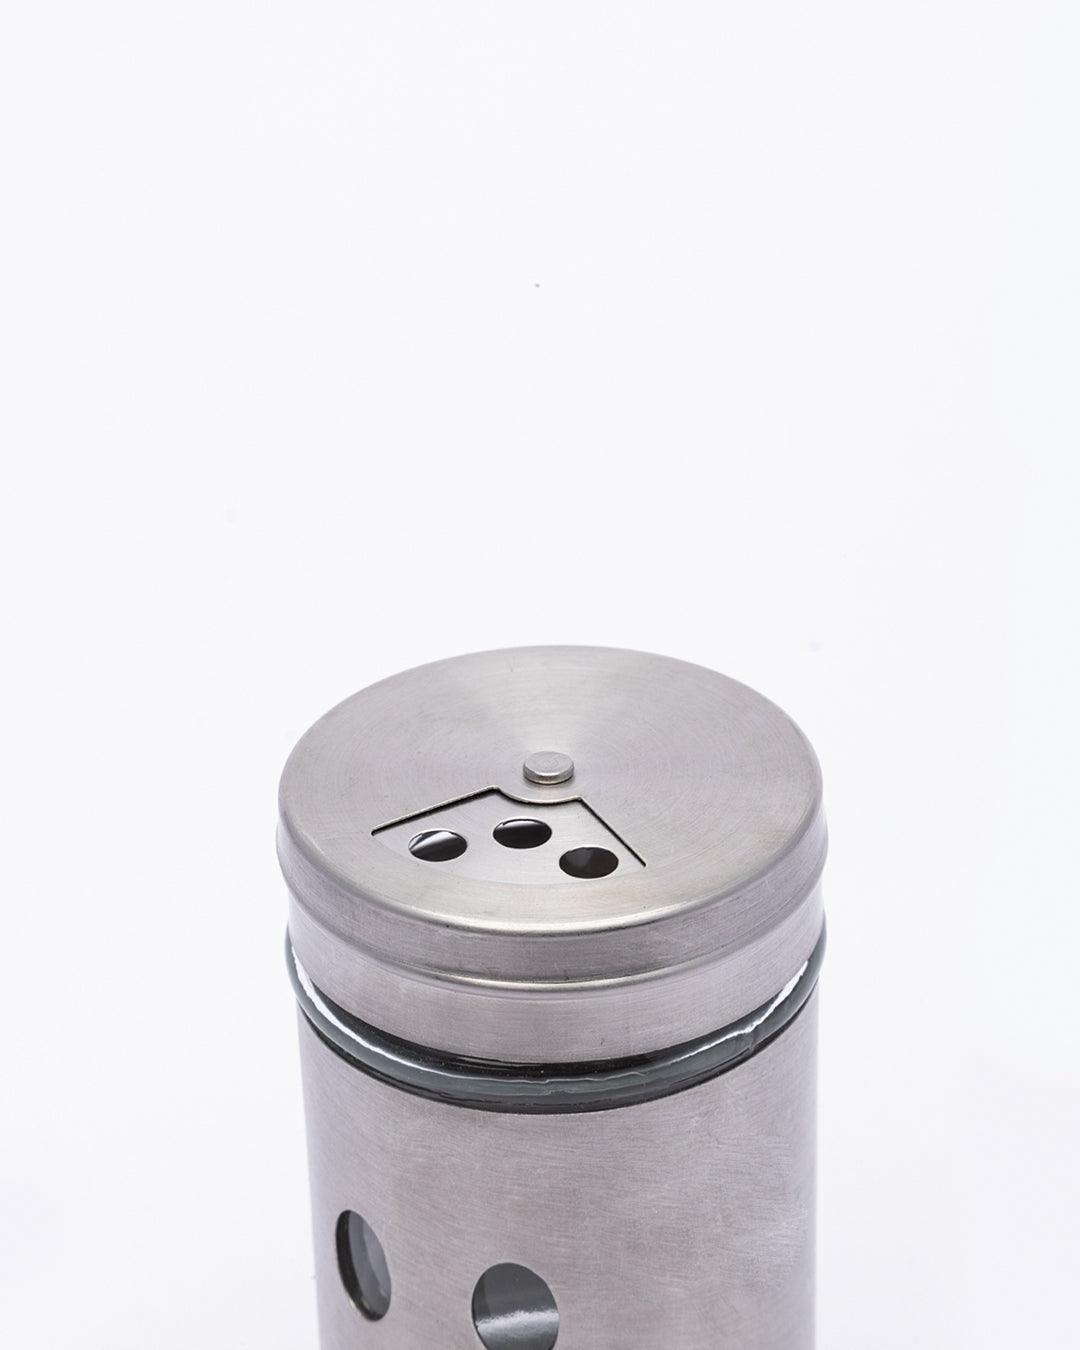 Salt & Pepper Set, Silver, Stainless Steel, Glass, Set of 2, 100 mL -  MARKET99 – MARKET 99